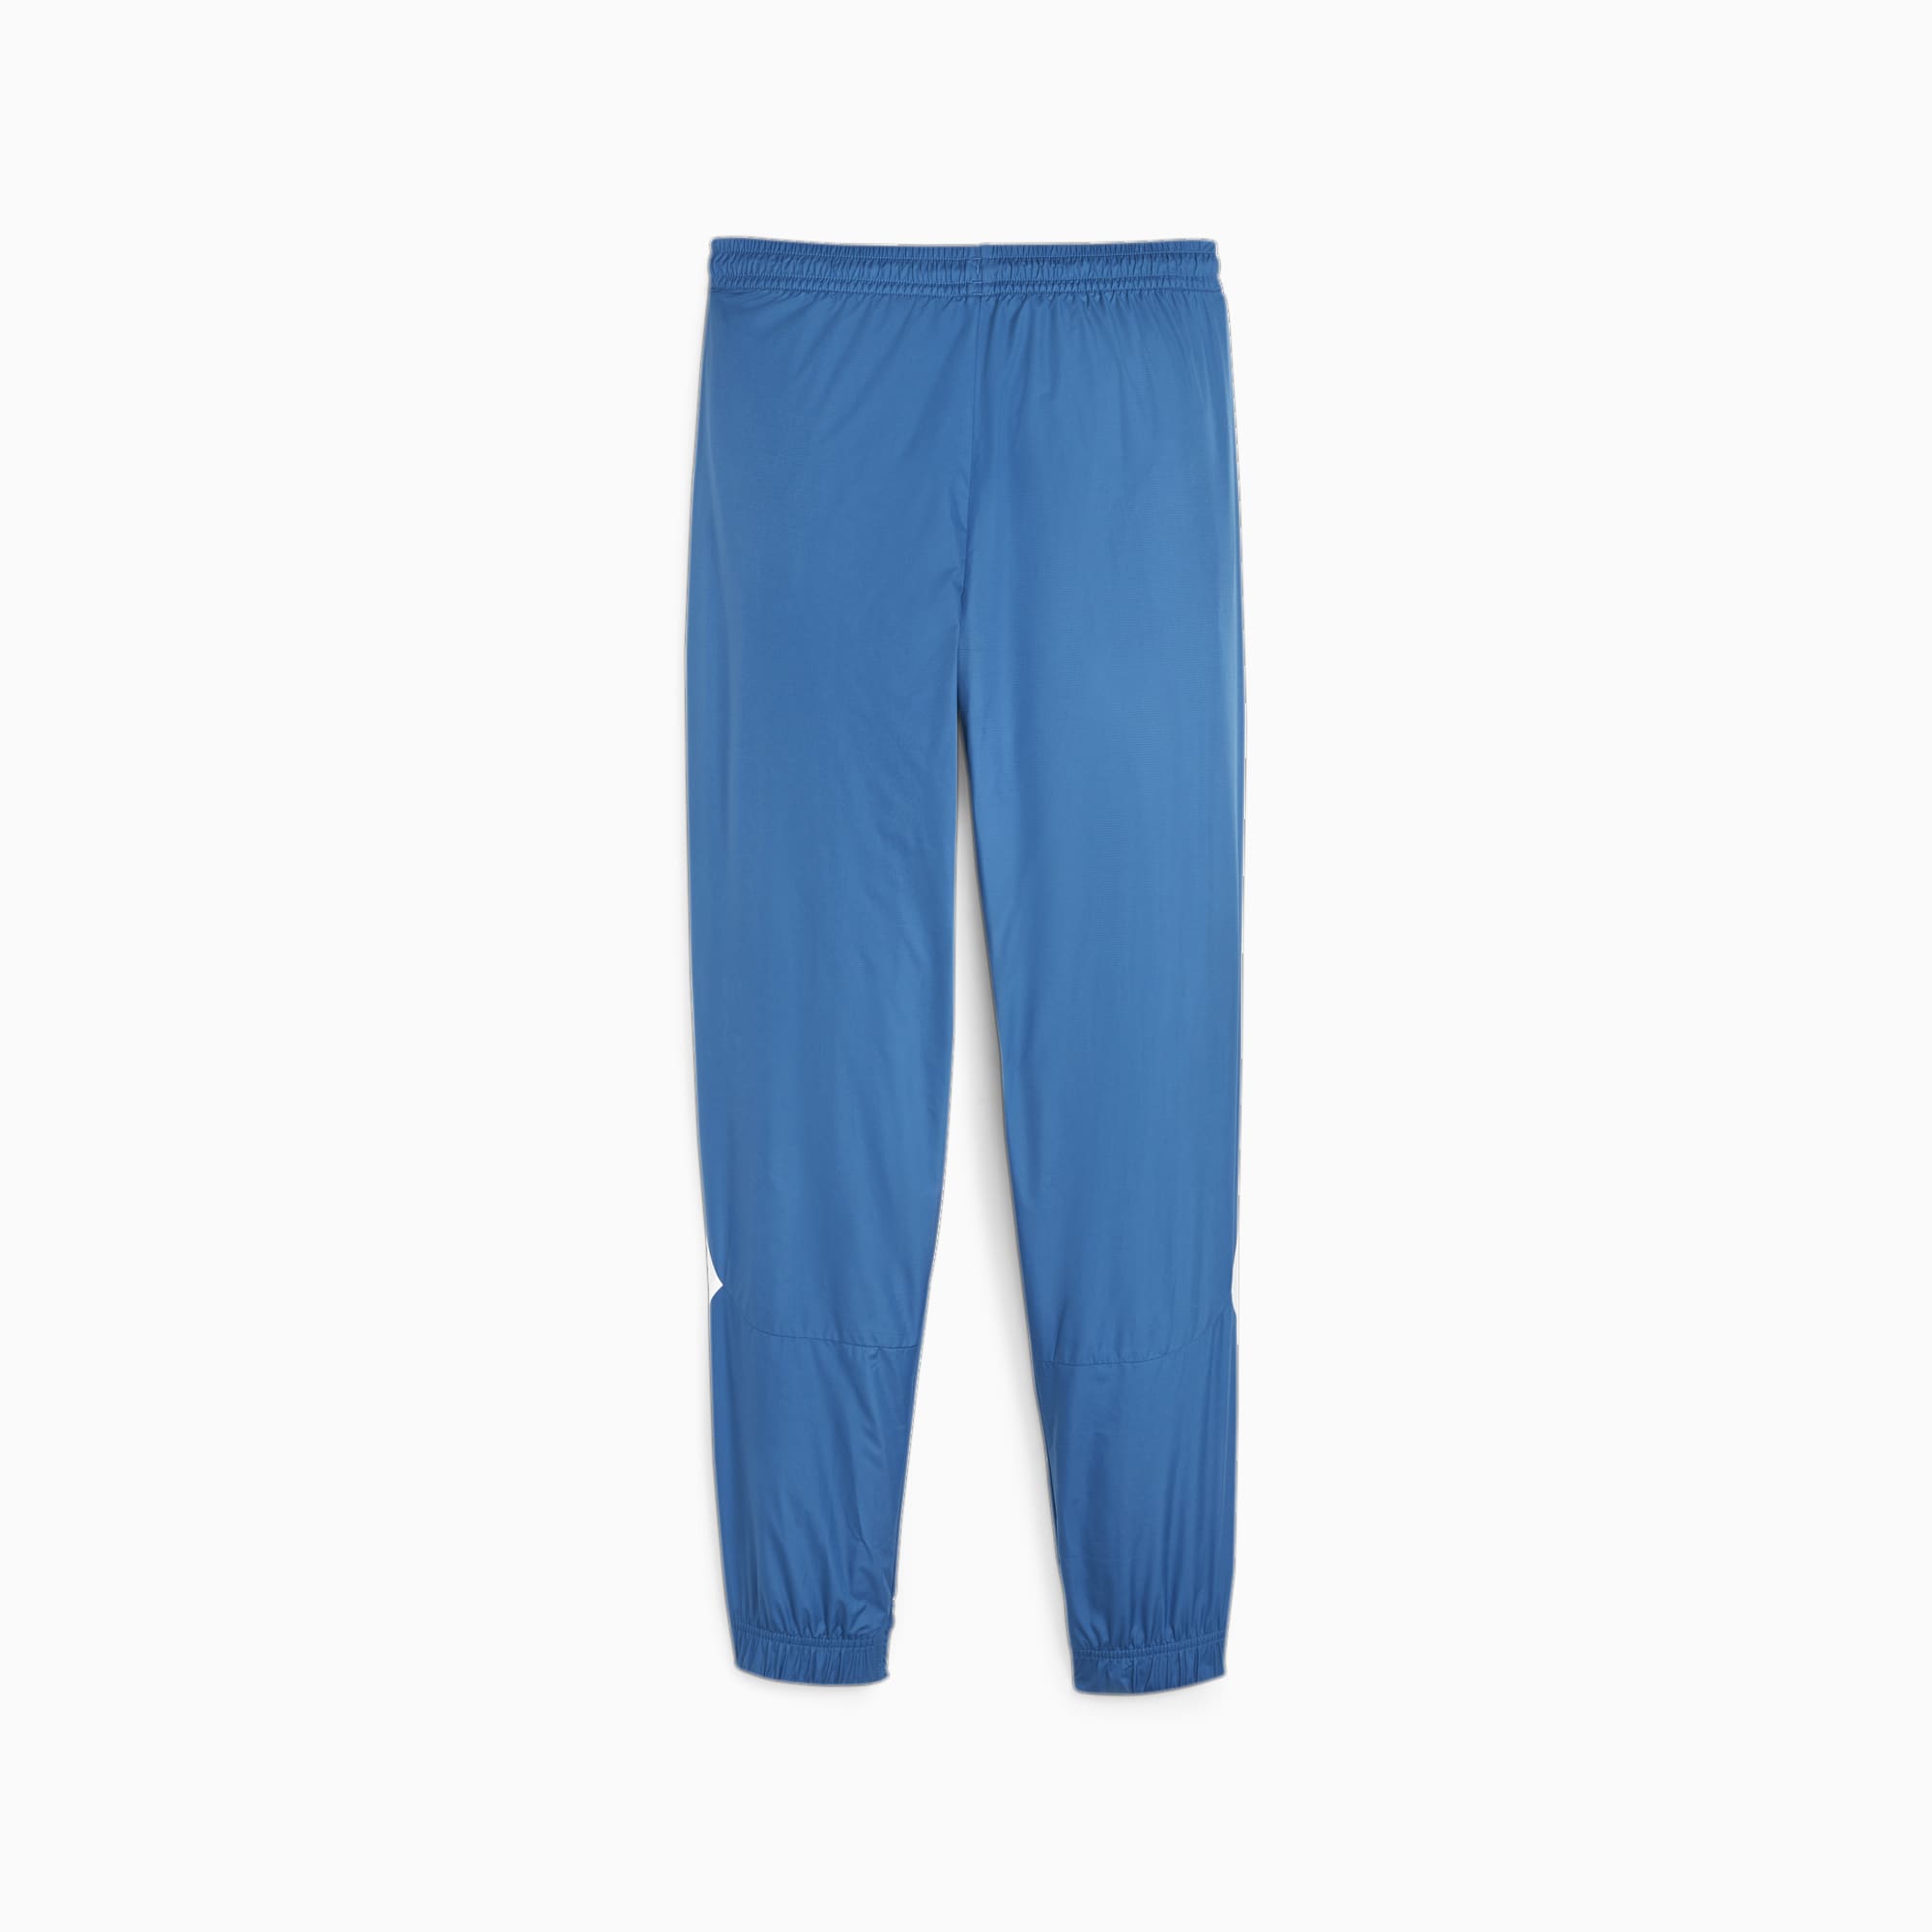 PUMA Manchester City F.C. Prematch Woven Pants Men, Lake Blue/White, Size S, Clothing